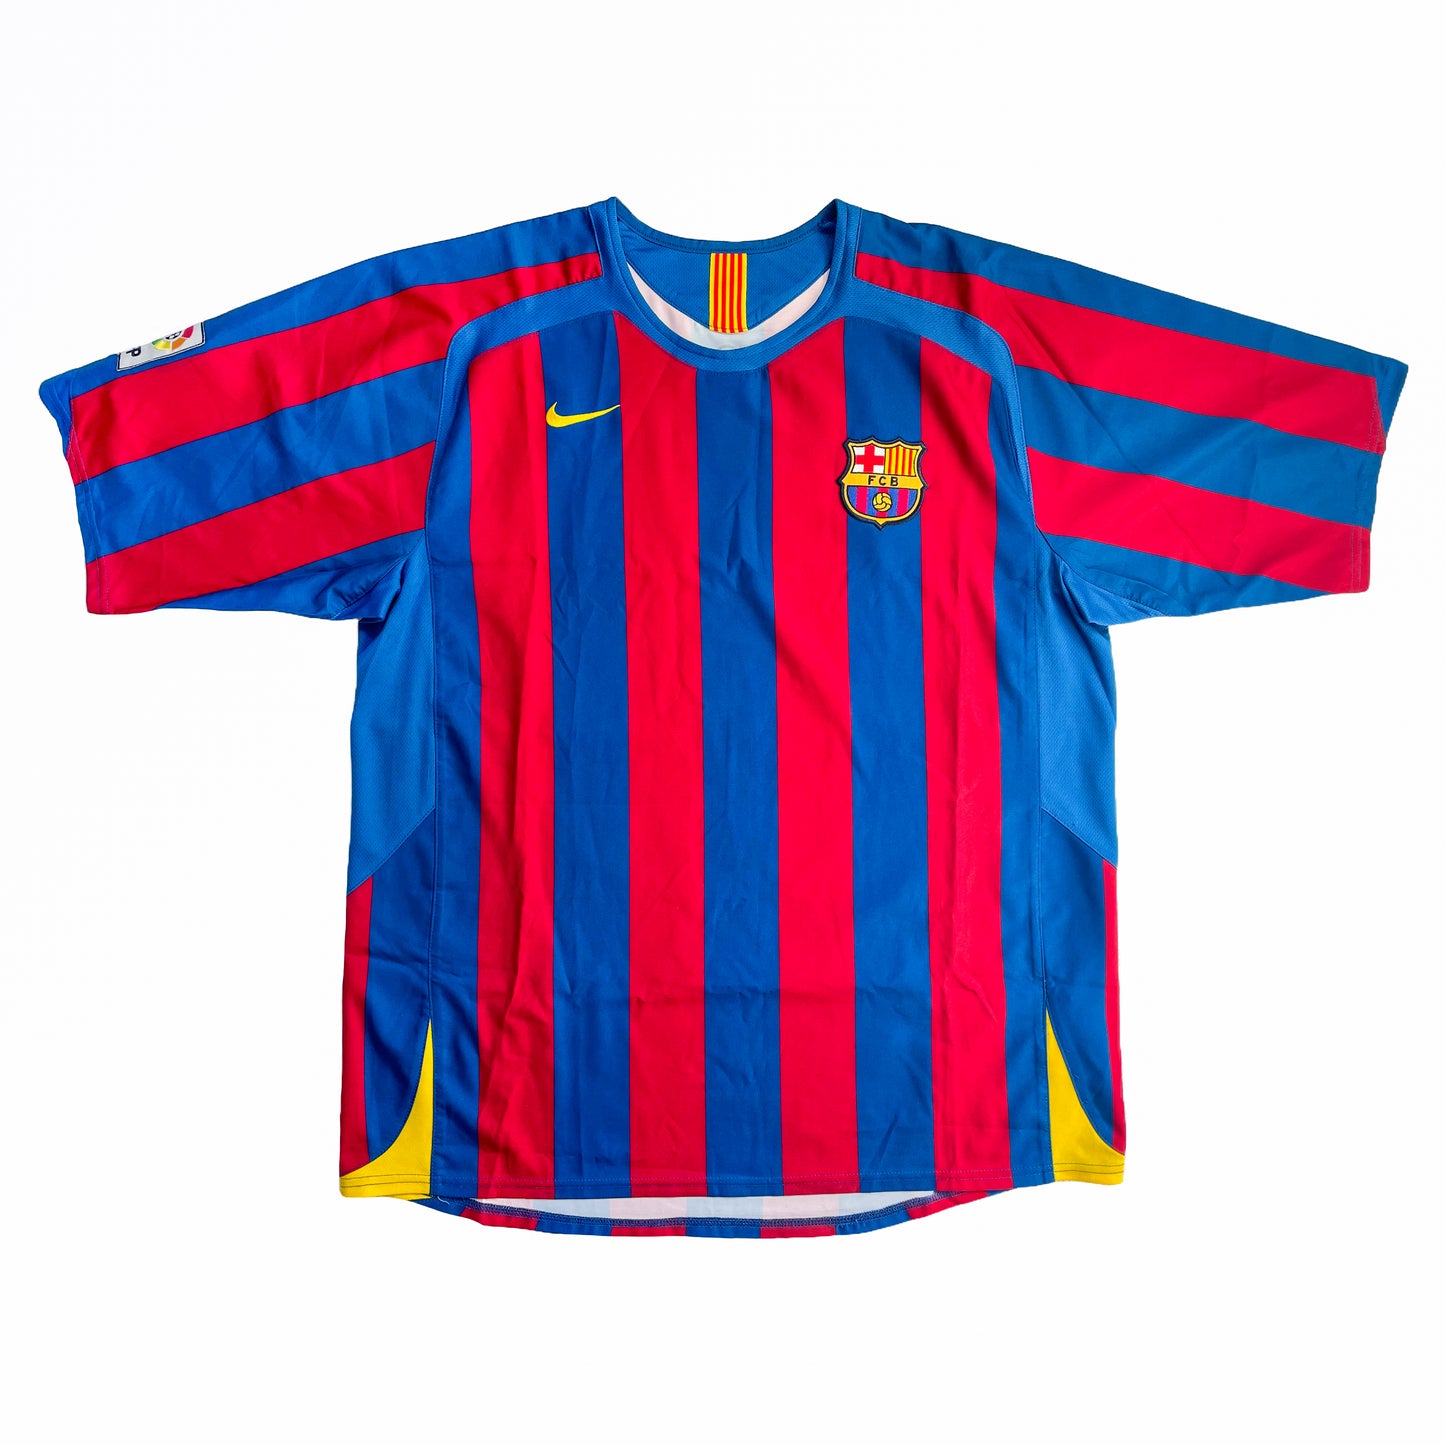 2005-2006 FC Barcelona home shirt #9 Eto’o (XL)